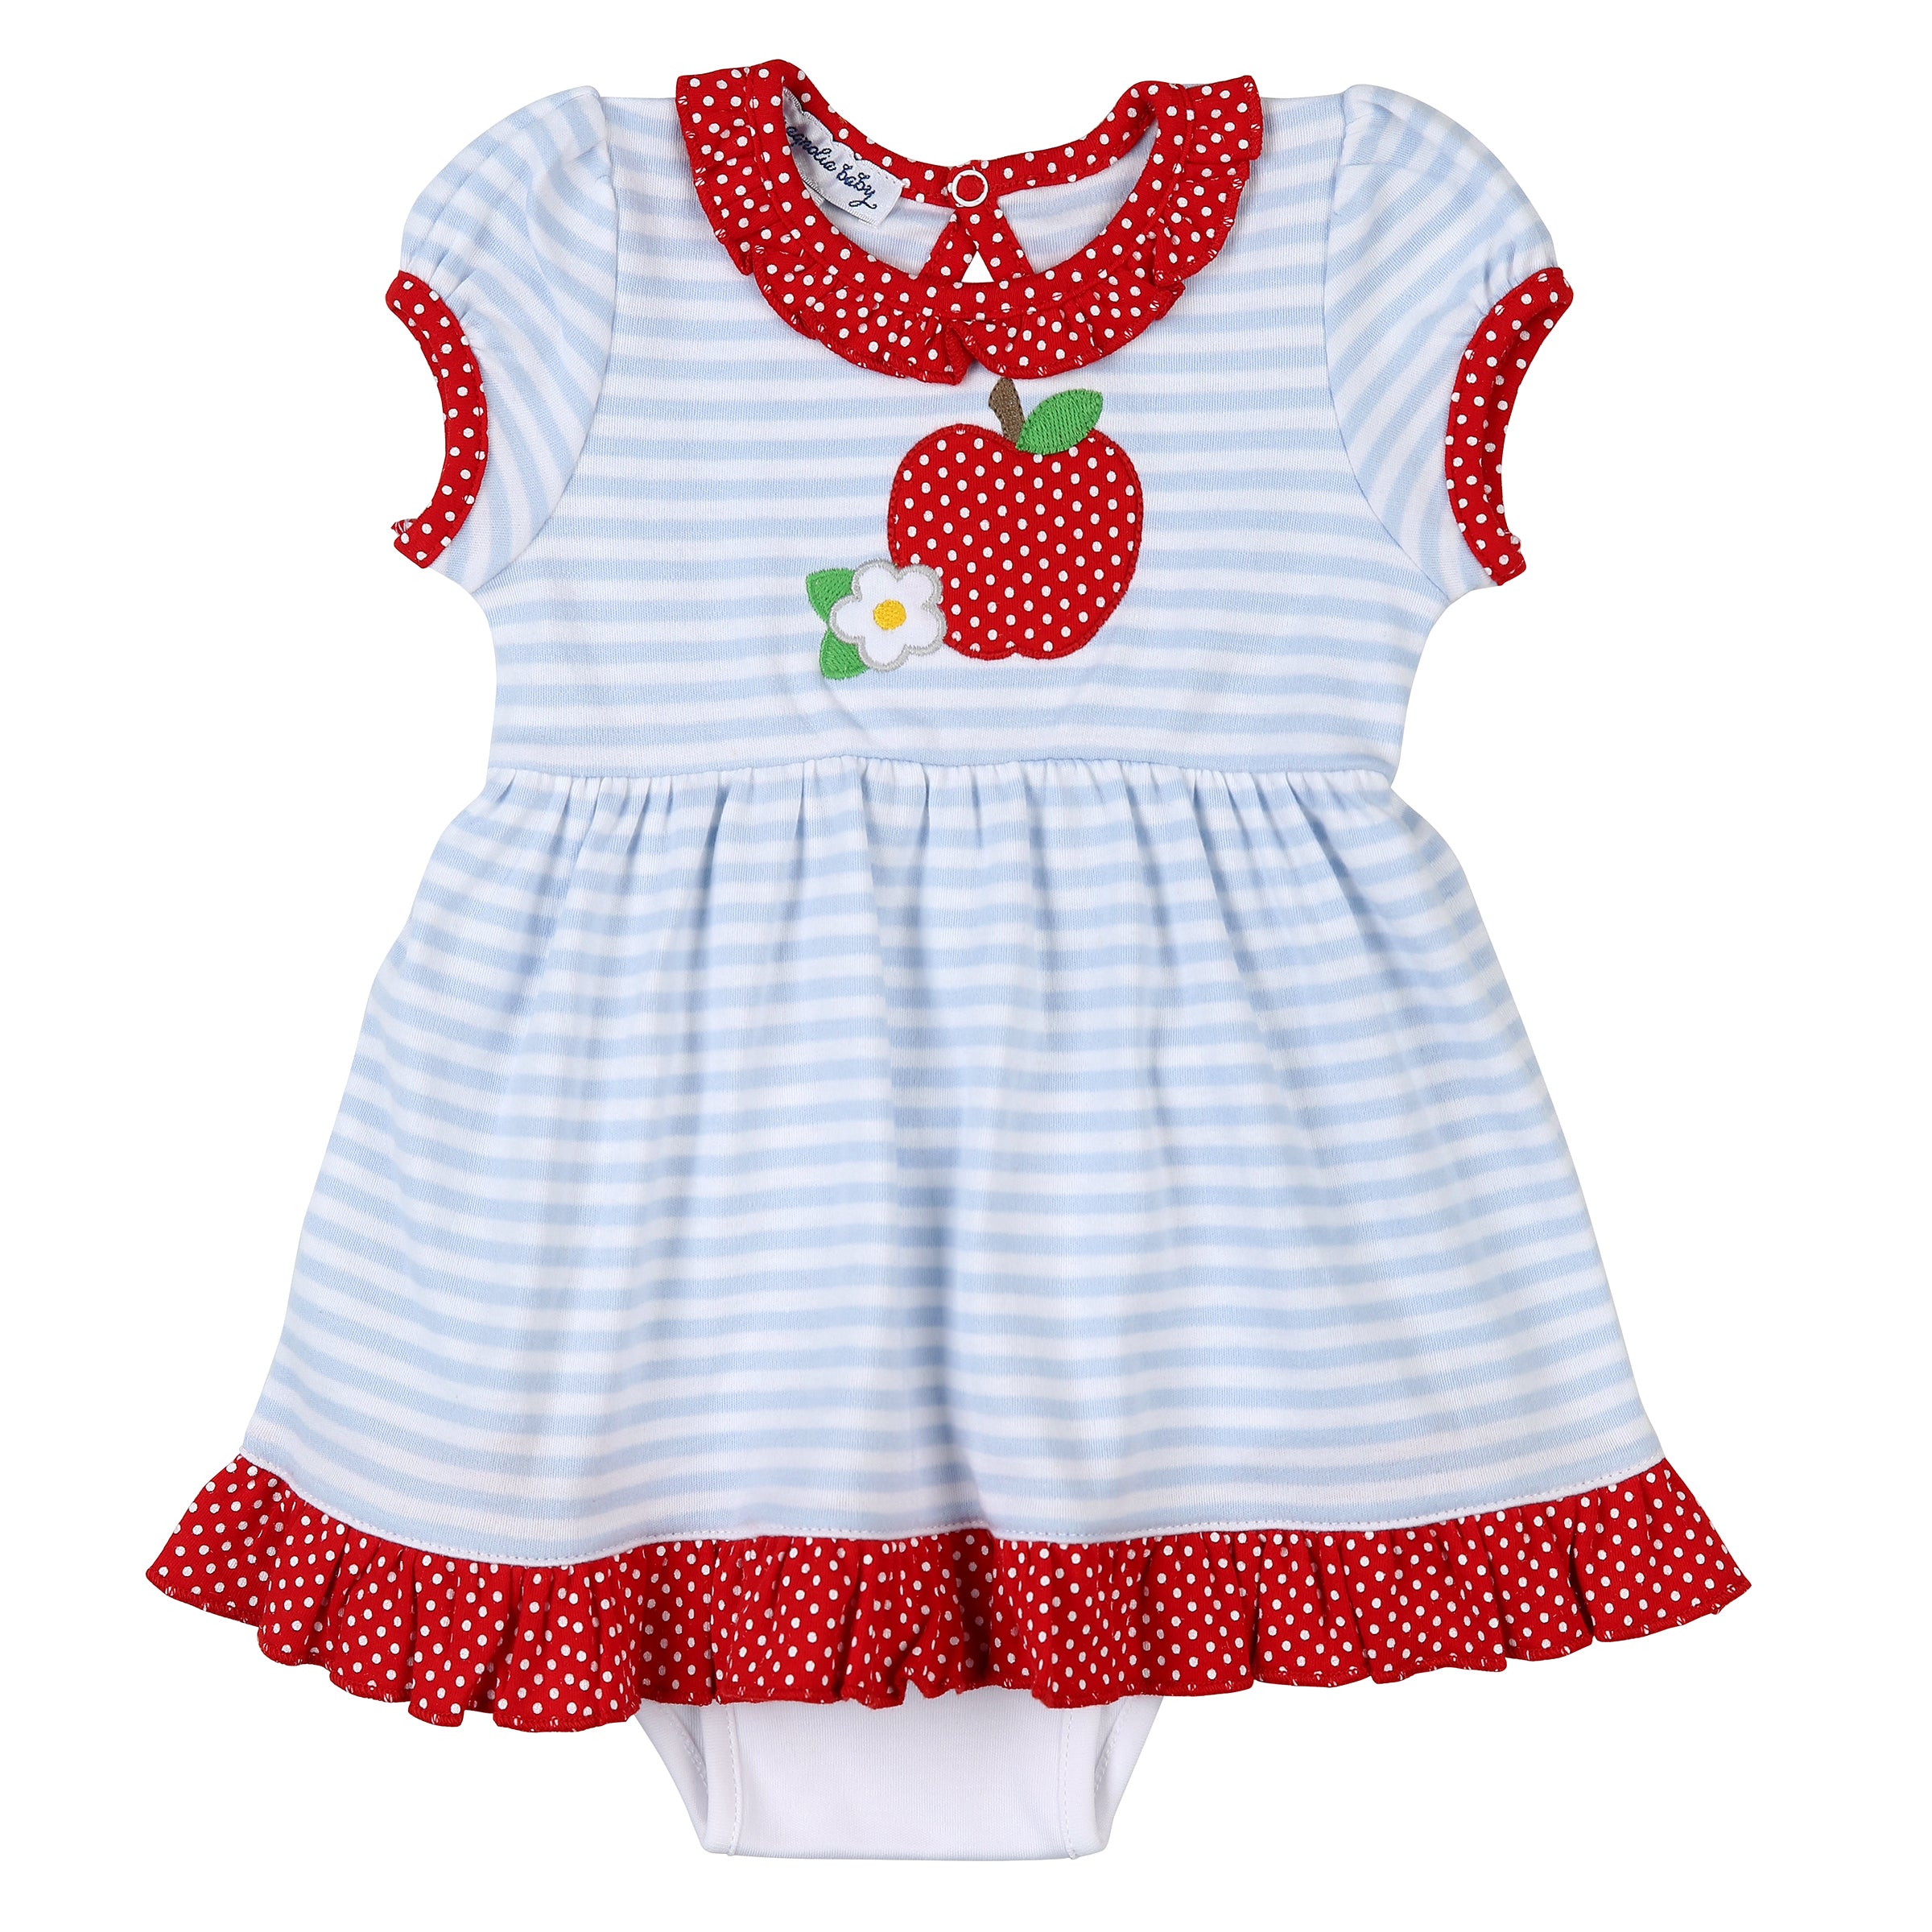 Red Apple Toddler Dress